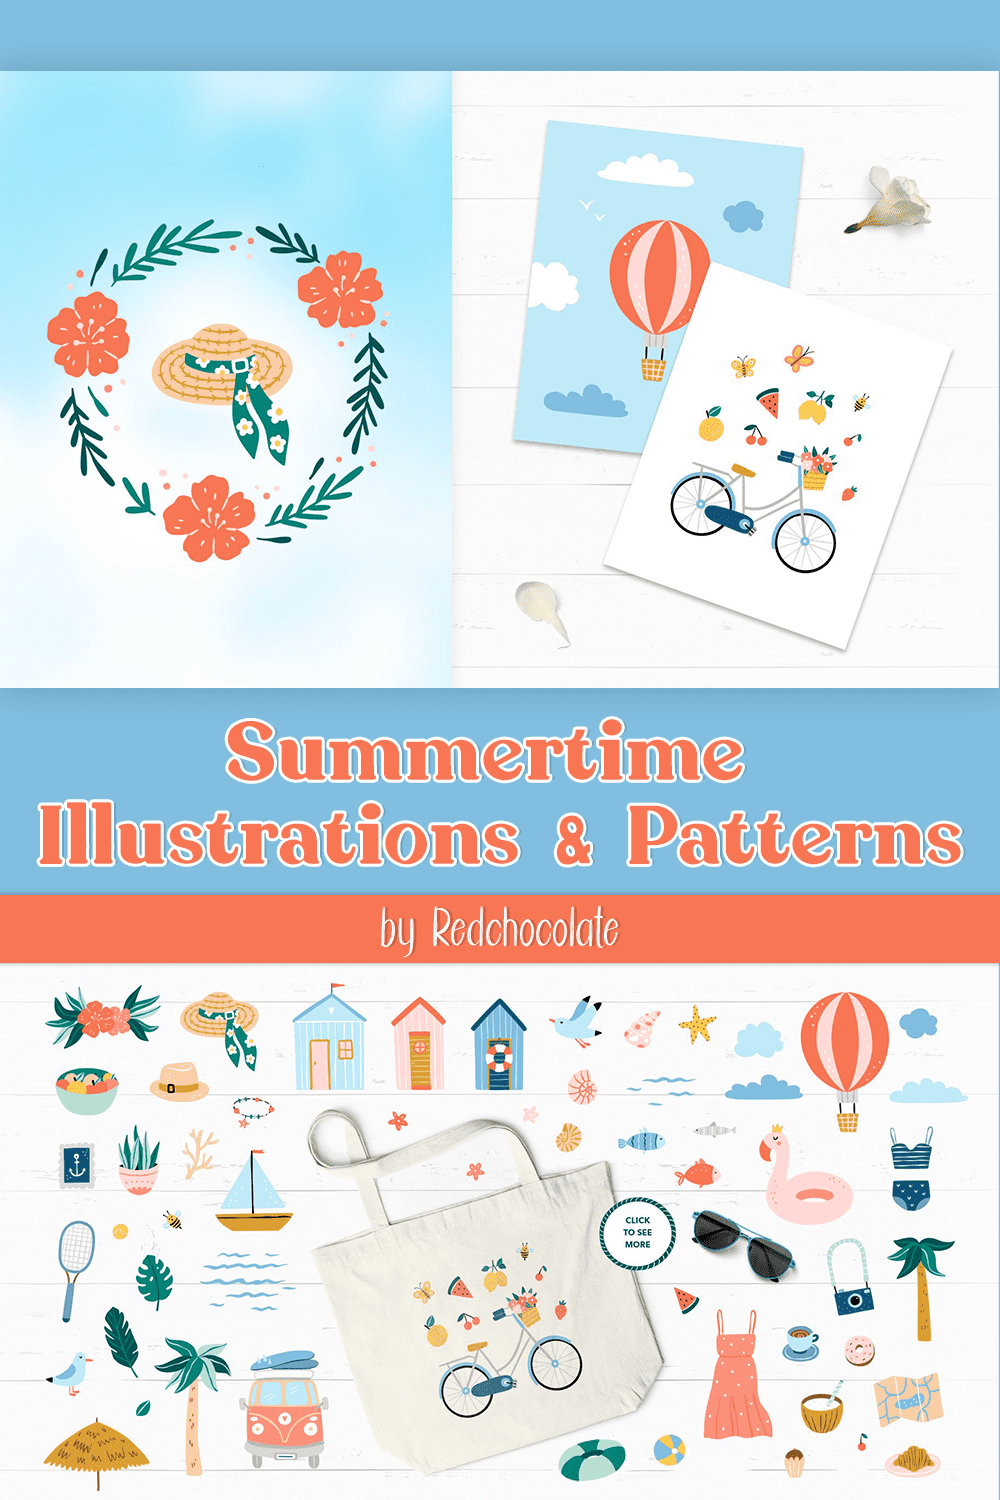 summertime illustrations patterns pinterest